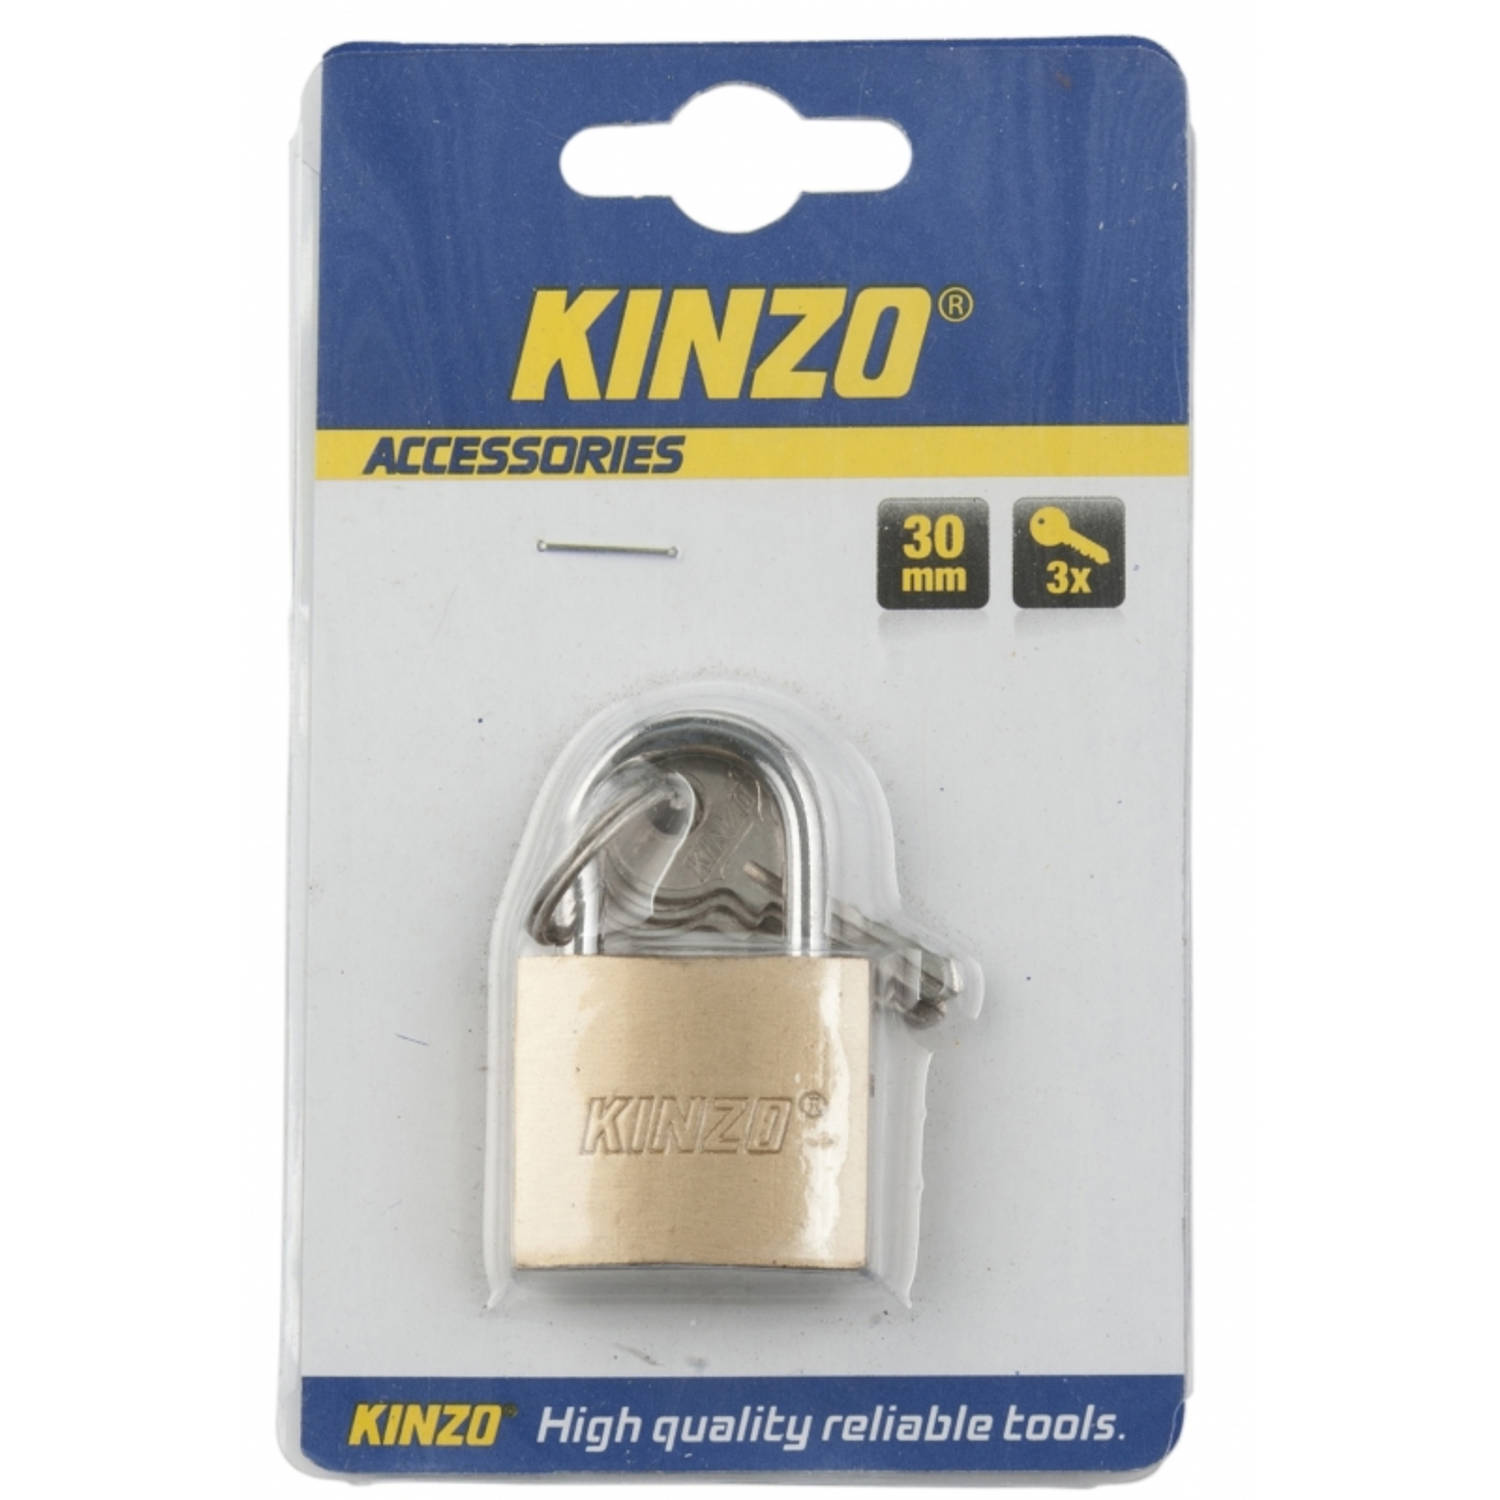 Kinzo 2x Hangslot 30mm